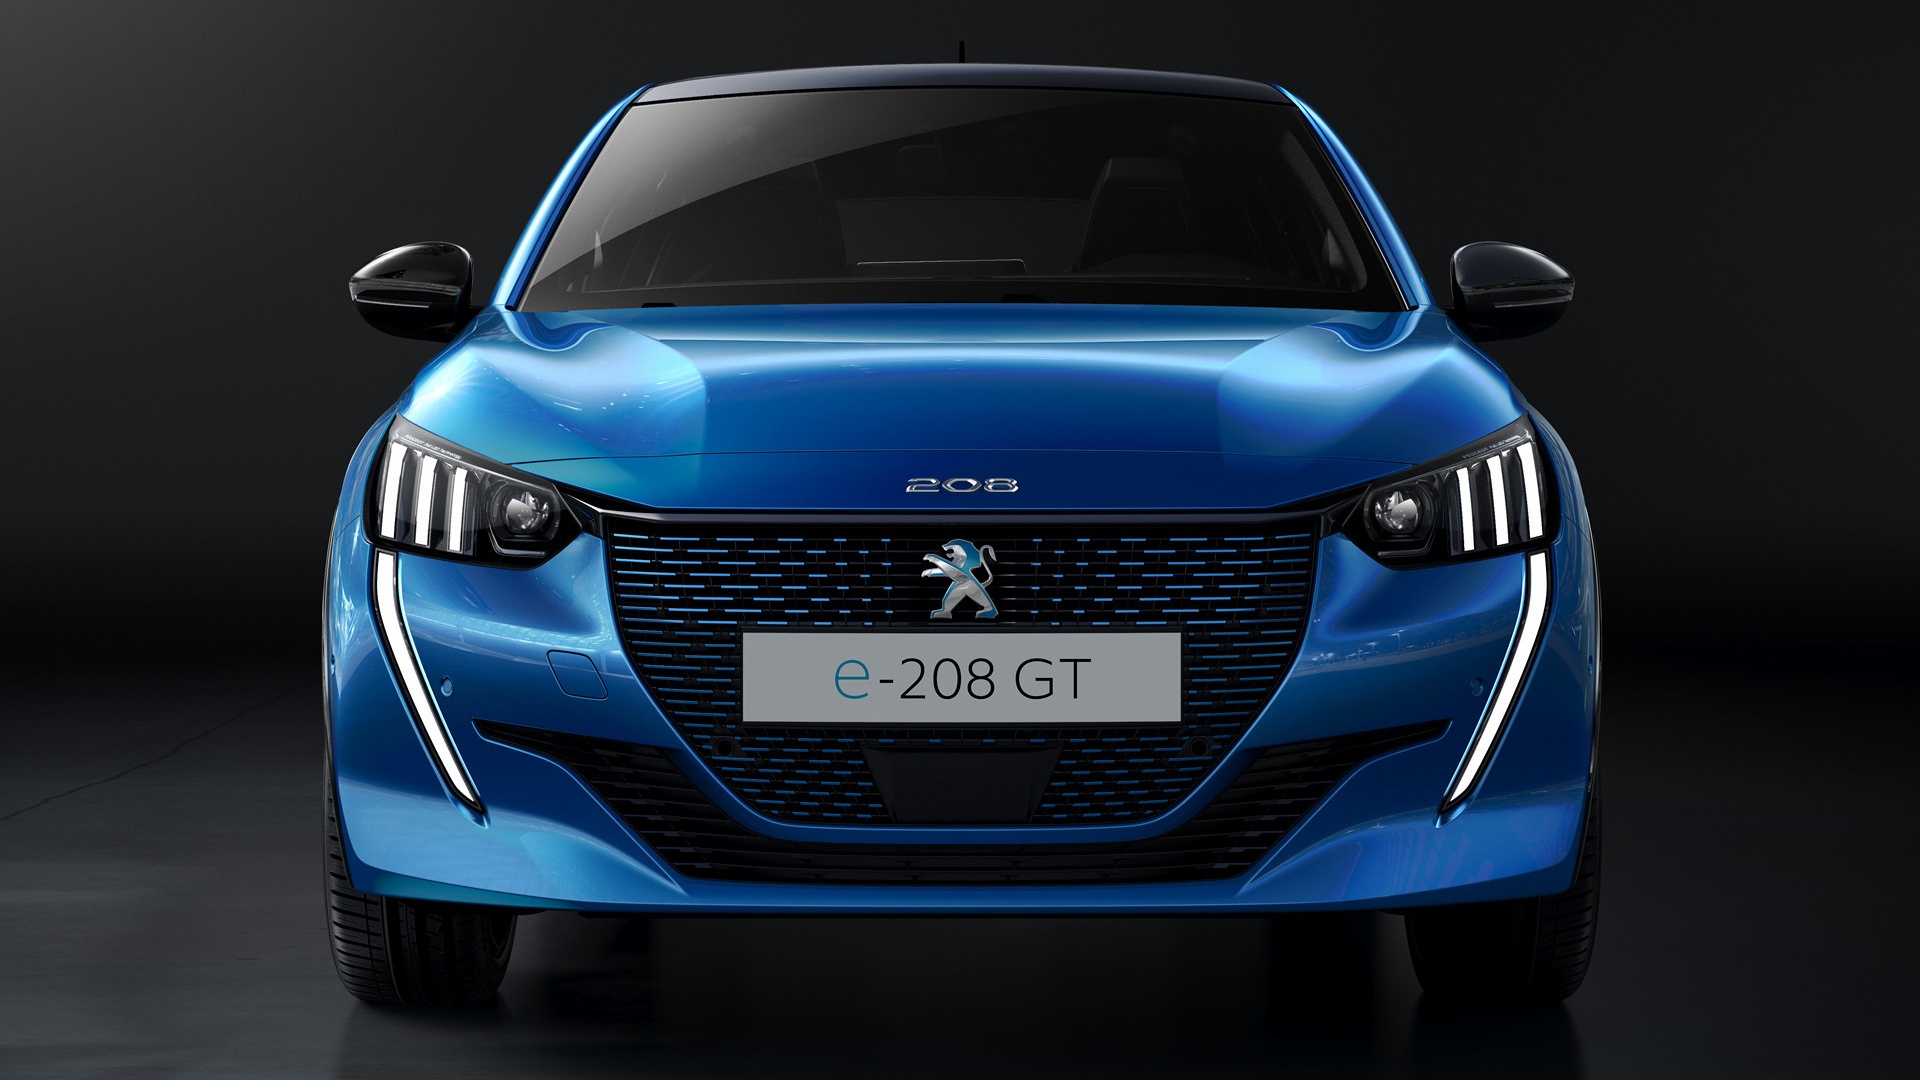 Peugeot e-208 GT, High-quality images, Cutting-edge electric car, Premium wallpapers, 1920x1080 Full HD Desktop